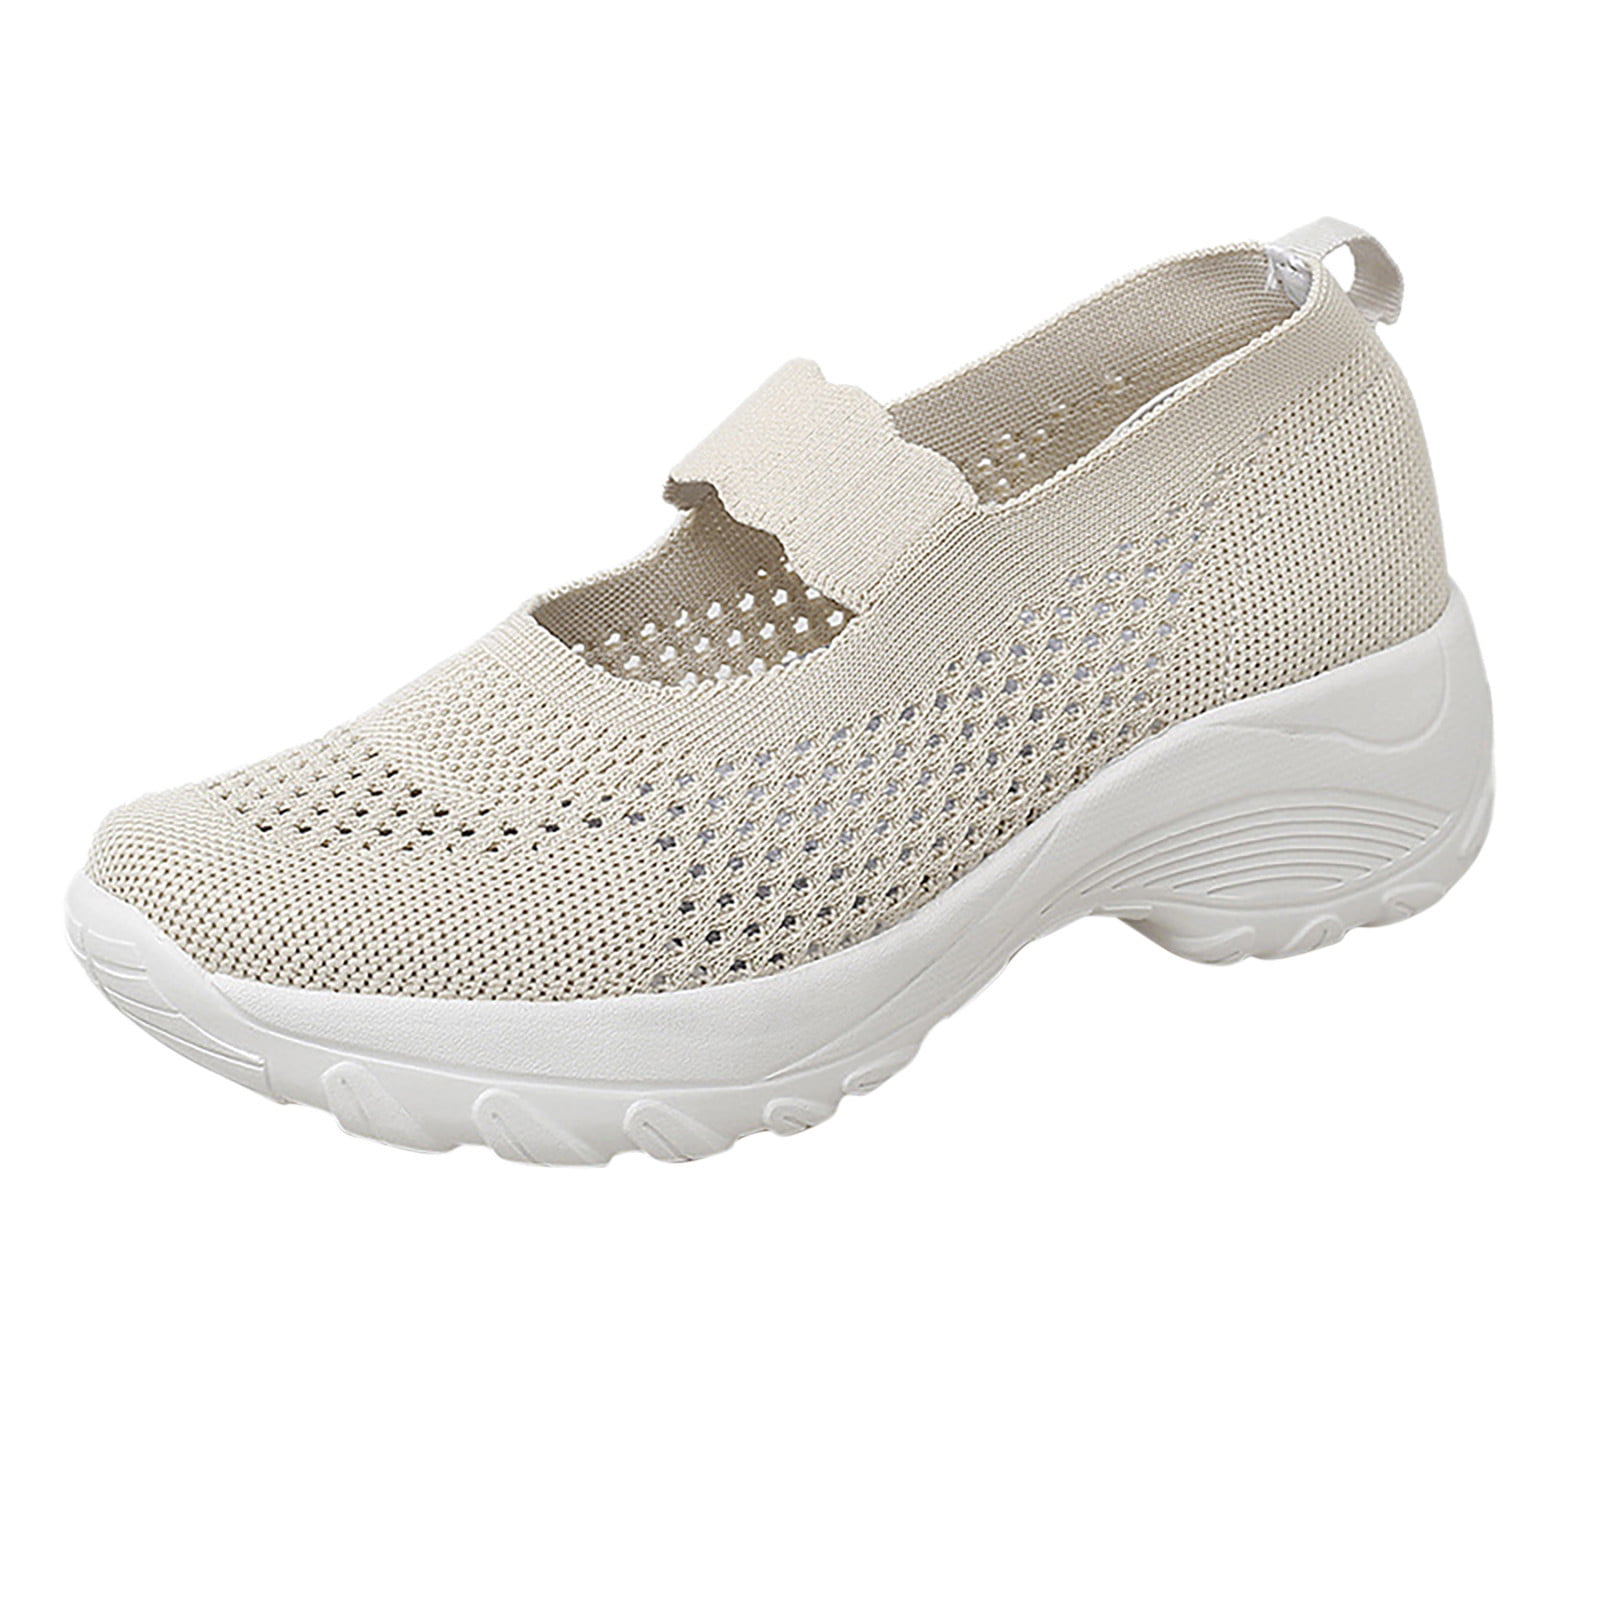 ASEIDFNSA Strap Sandals for Women Sneaker Women 8 Summer Wedge Women'S ...